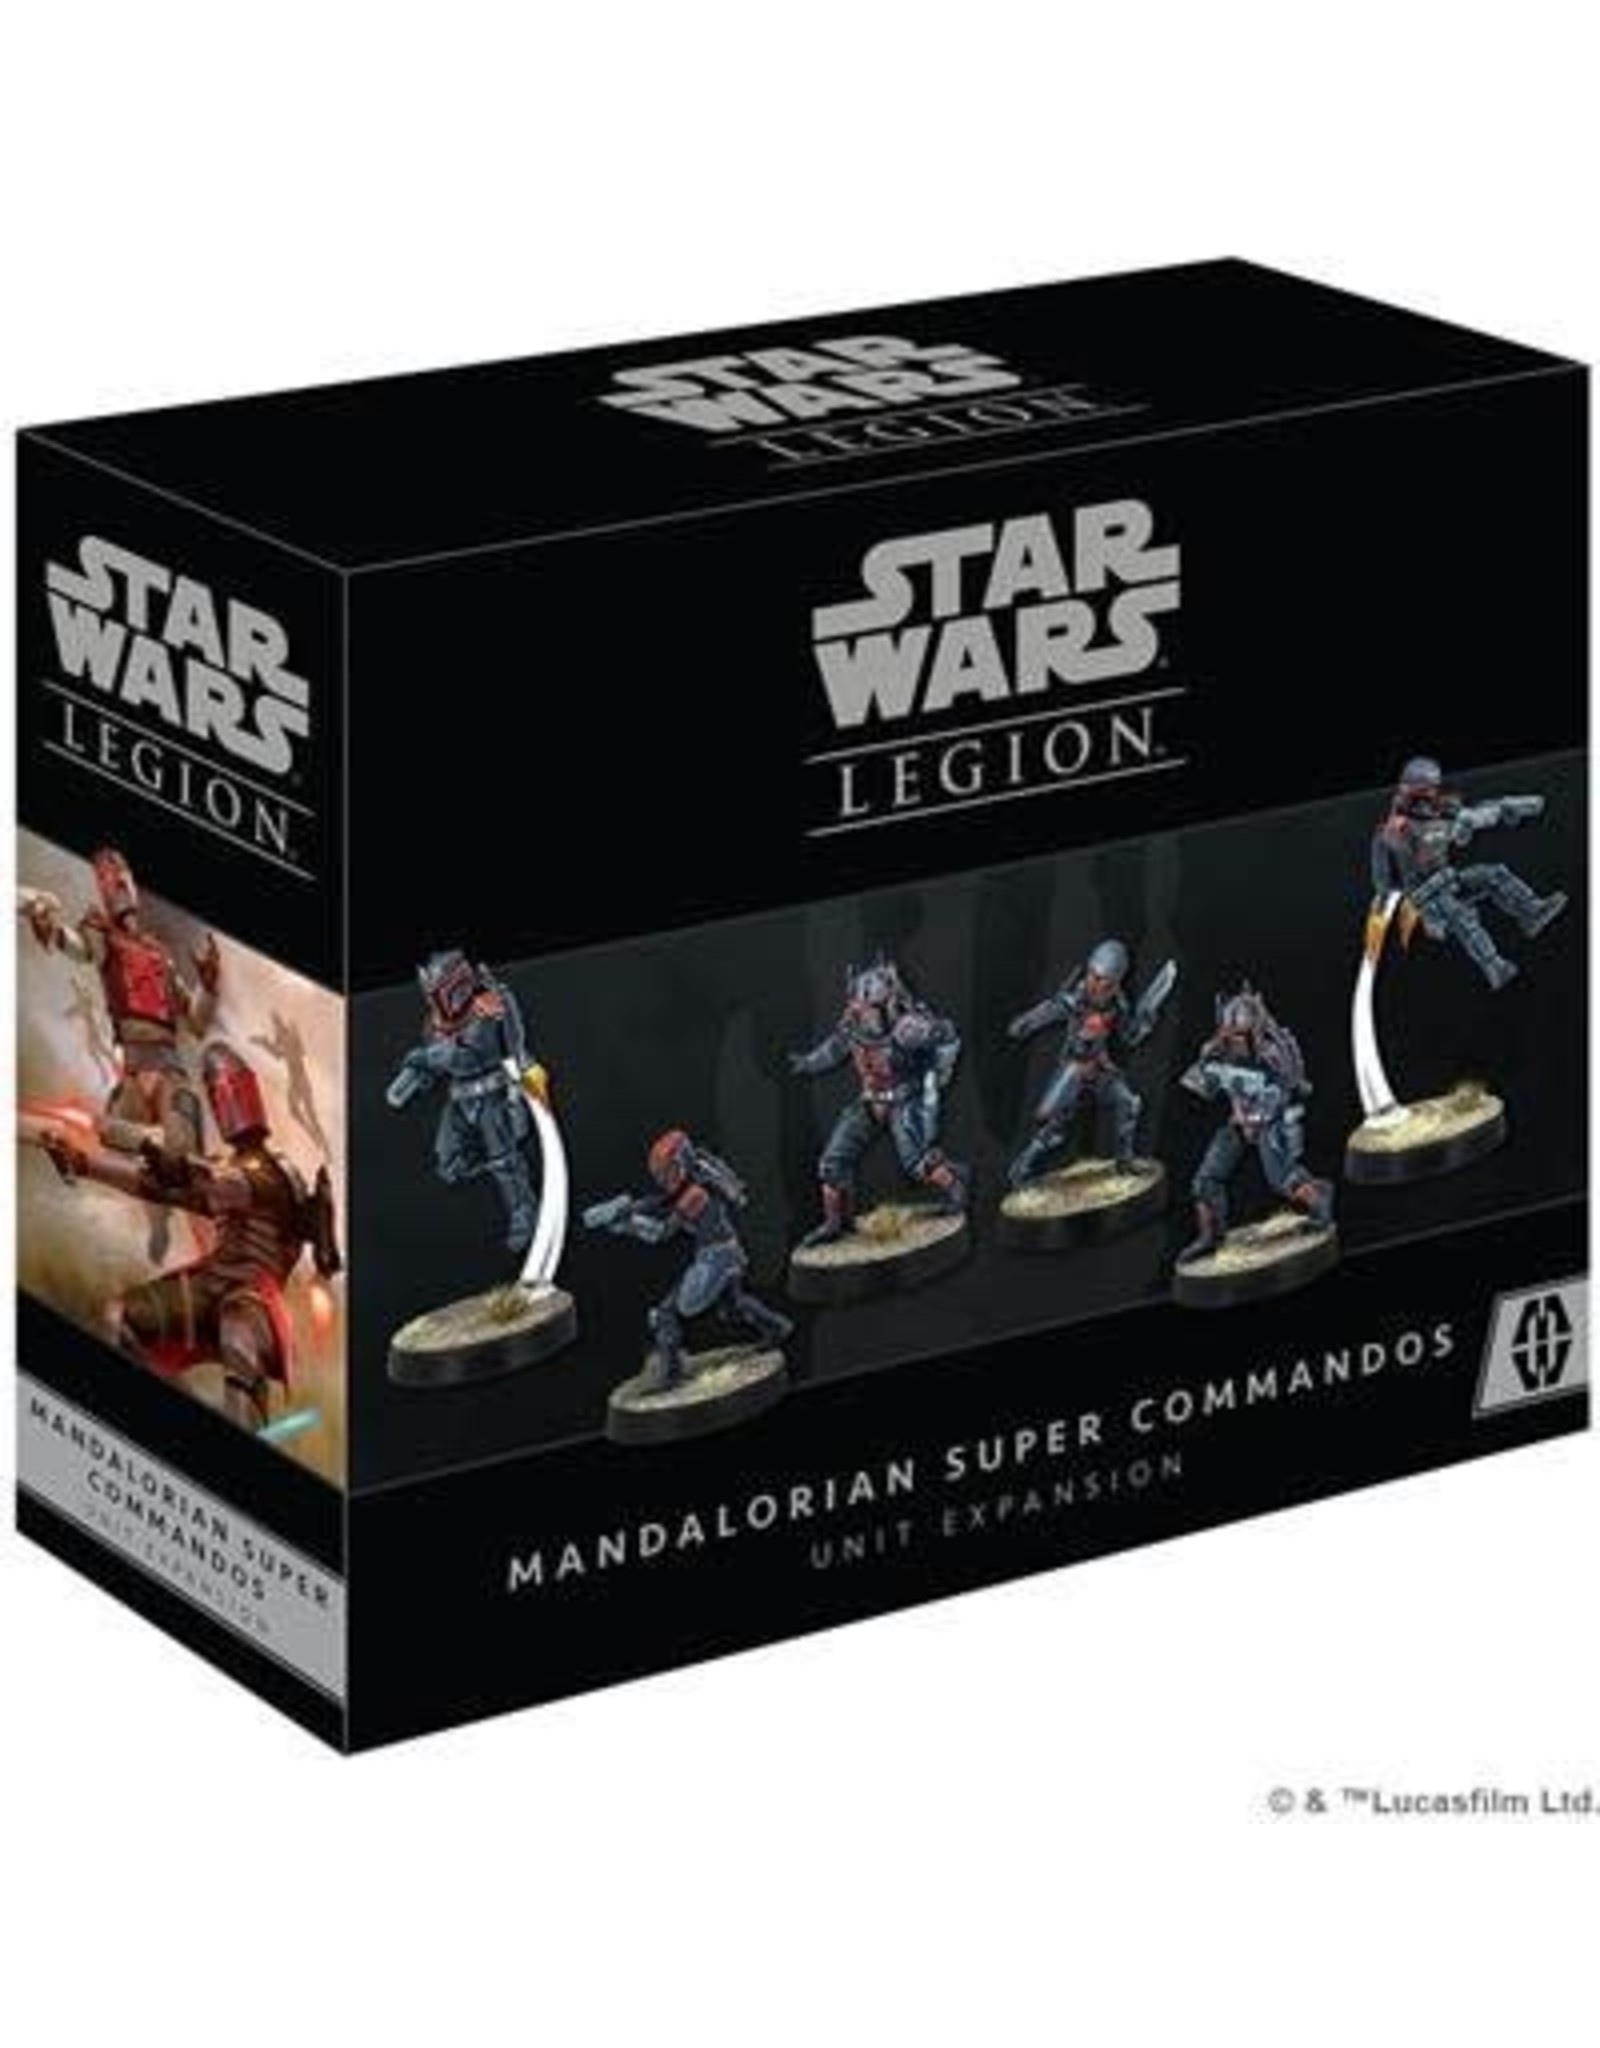 Atomic Mass Games Star Wars Legion: Mandalorian Super Commandos Unit Expansion